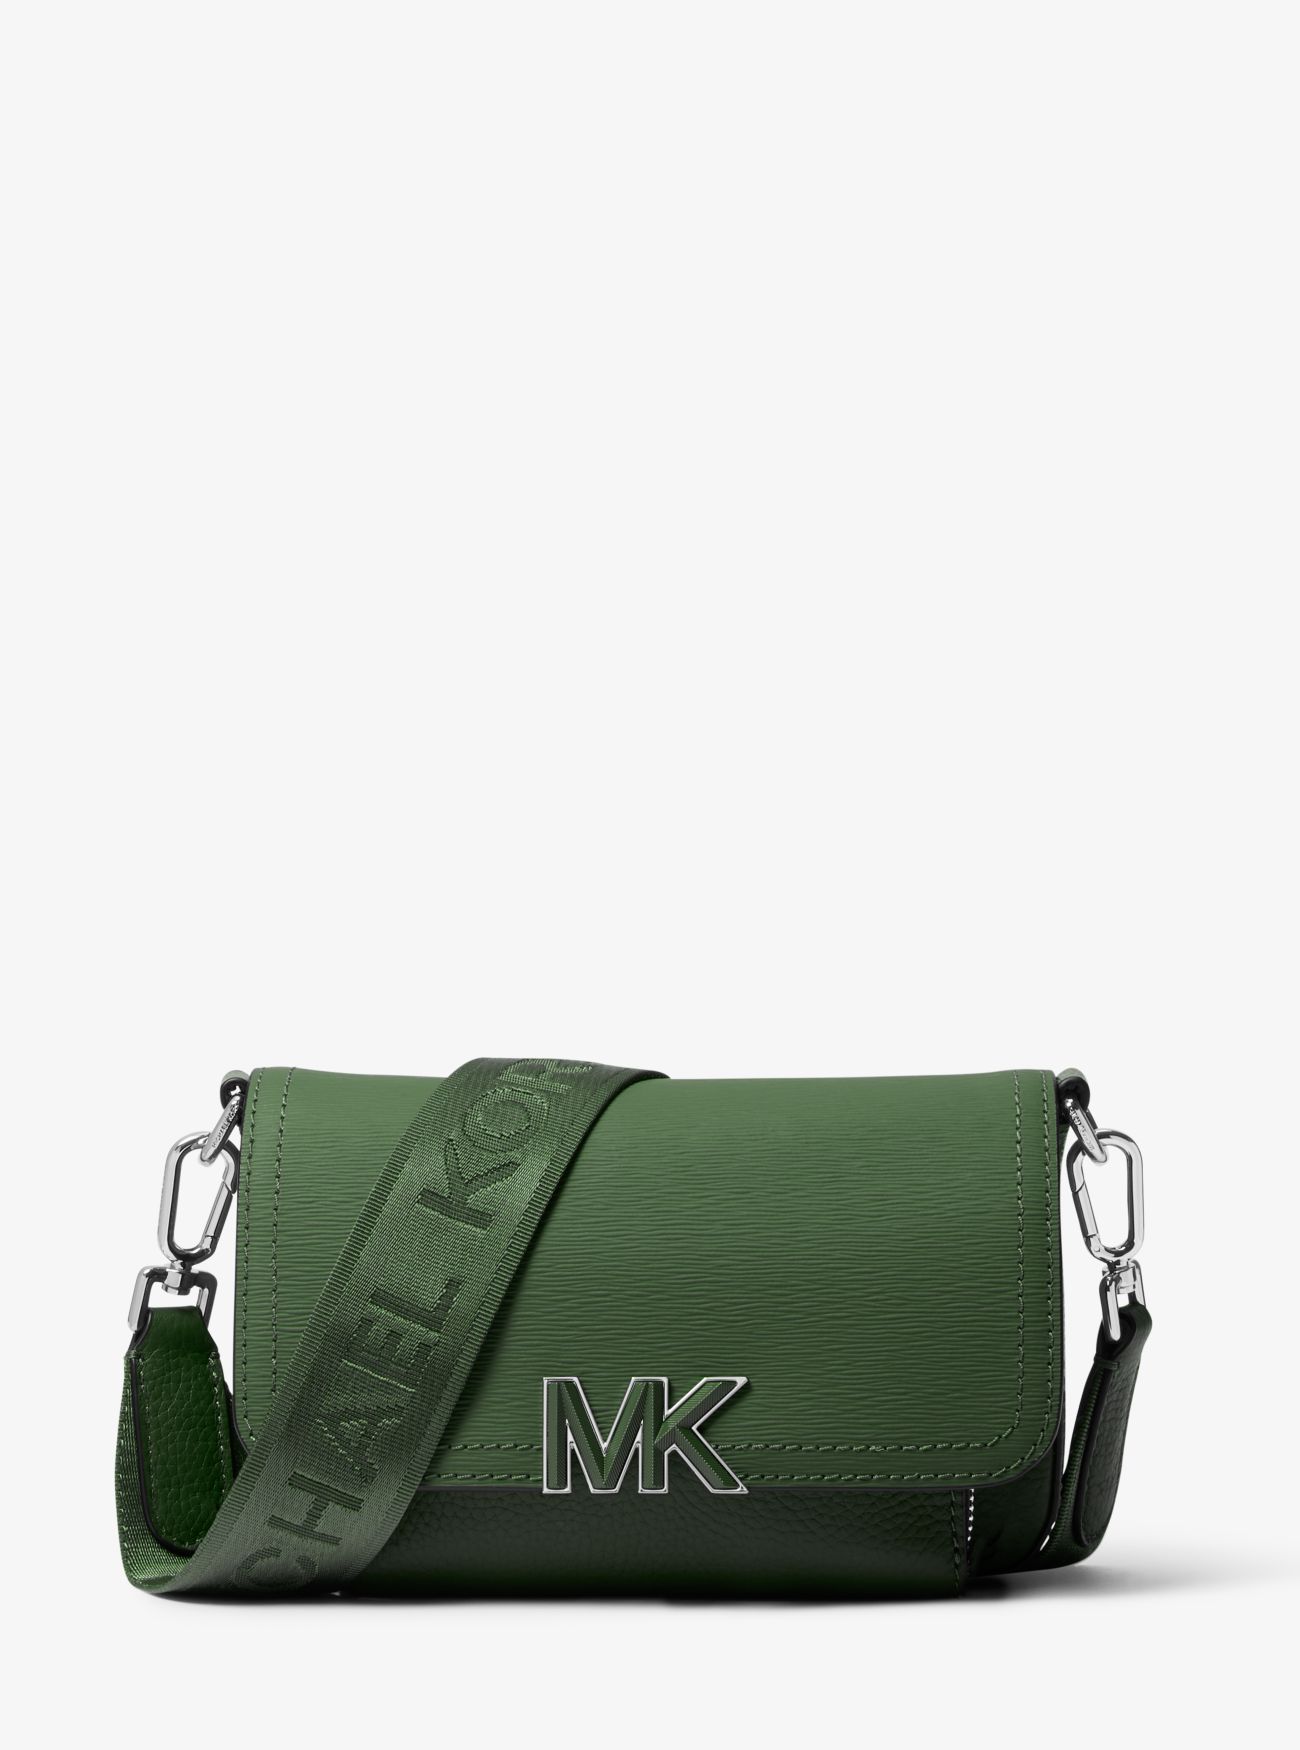 MK Hudson Textured Leather Crossbody Bag - Green - Michael Kors